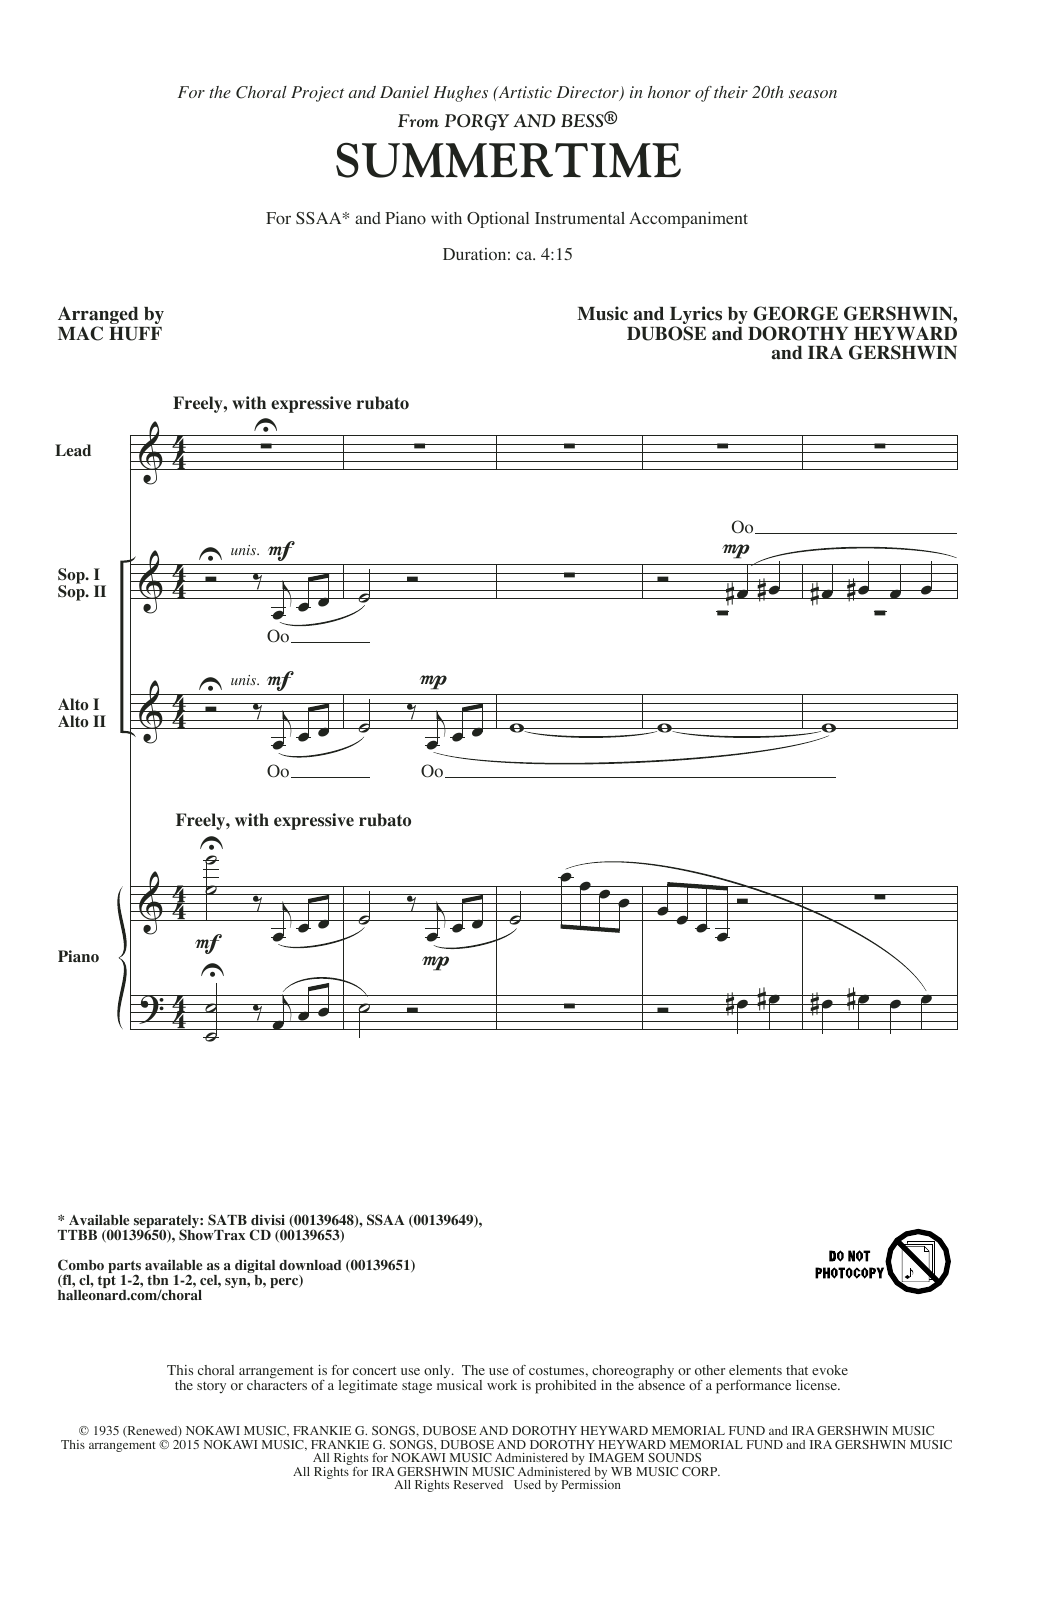 George Gershwin Summertime (arr. Mac Huff) Sheet Music Notes & Chords for TTBB - Download or Print PDF